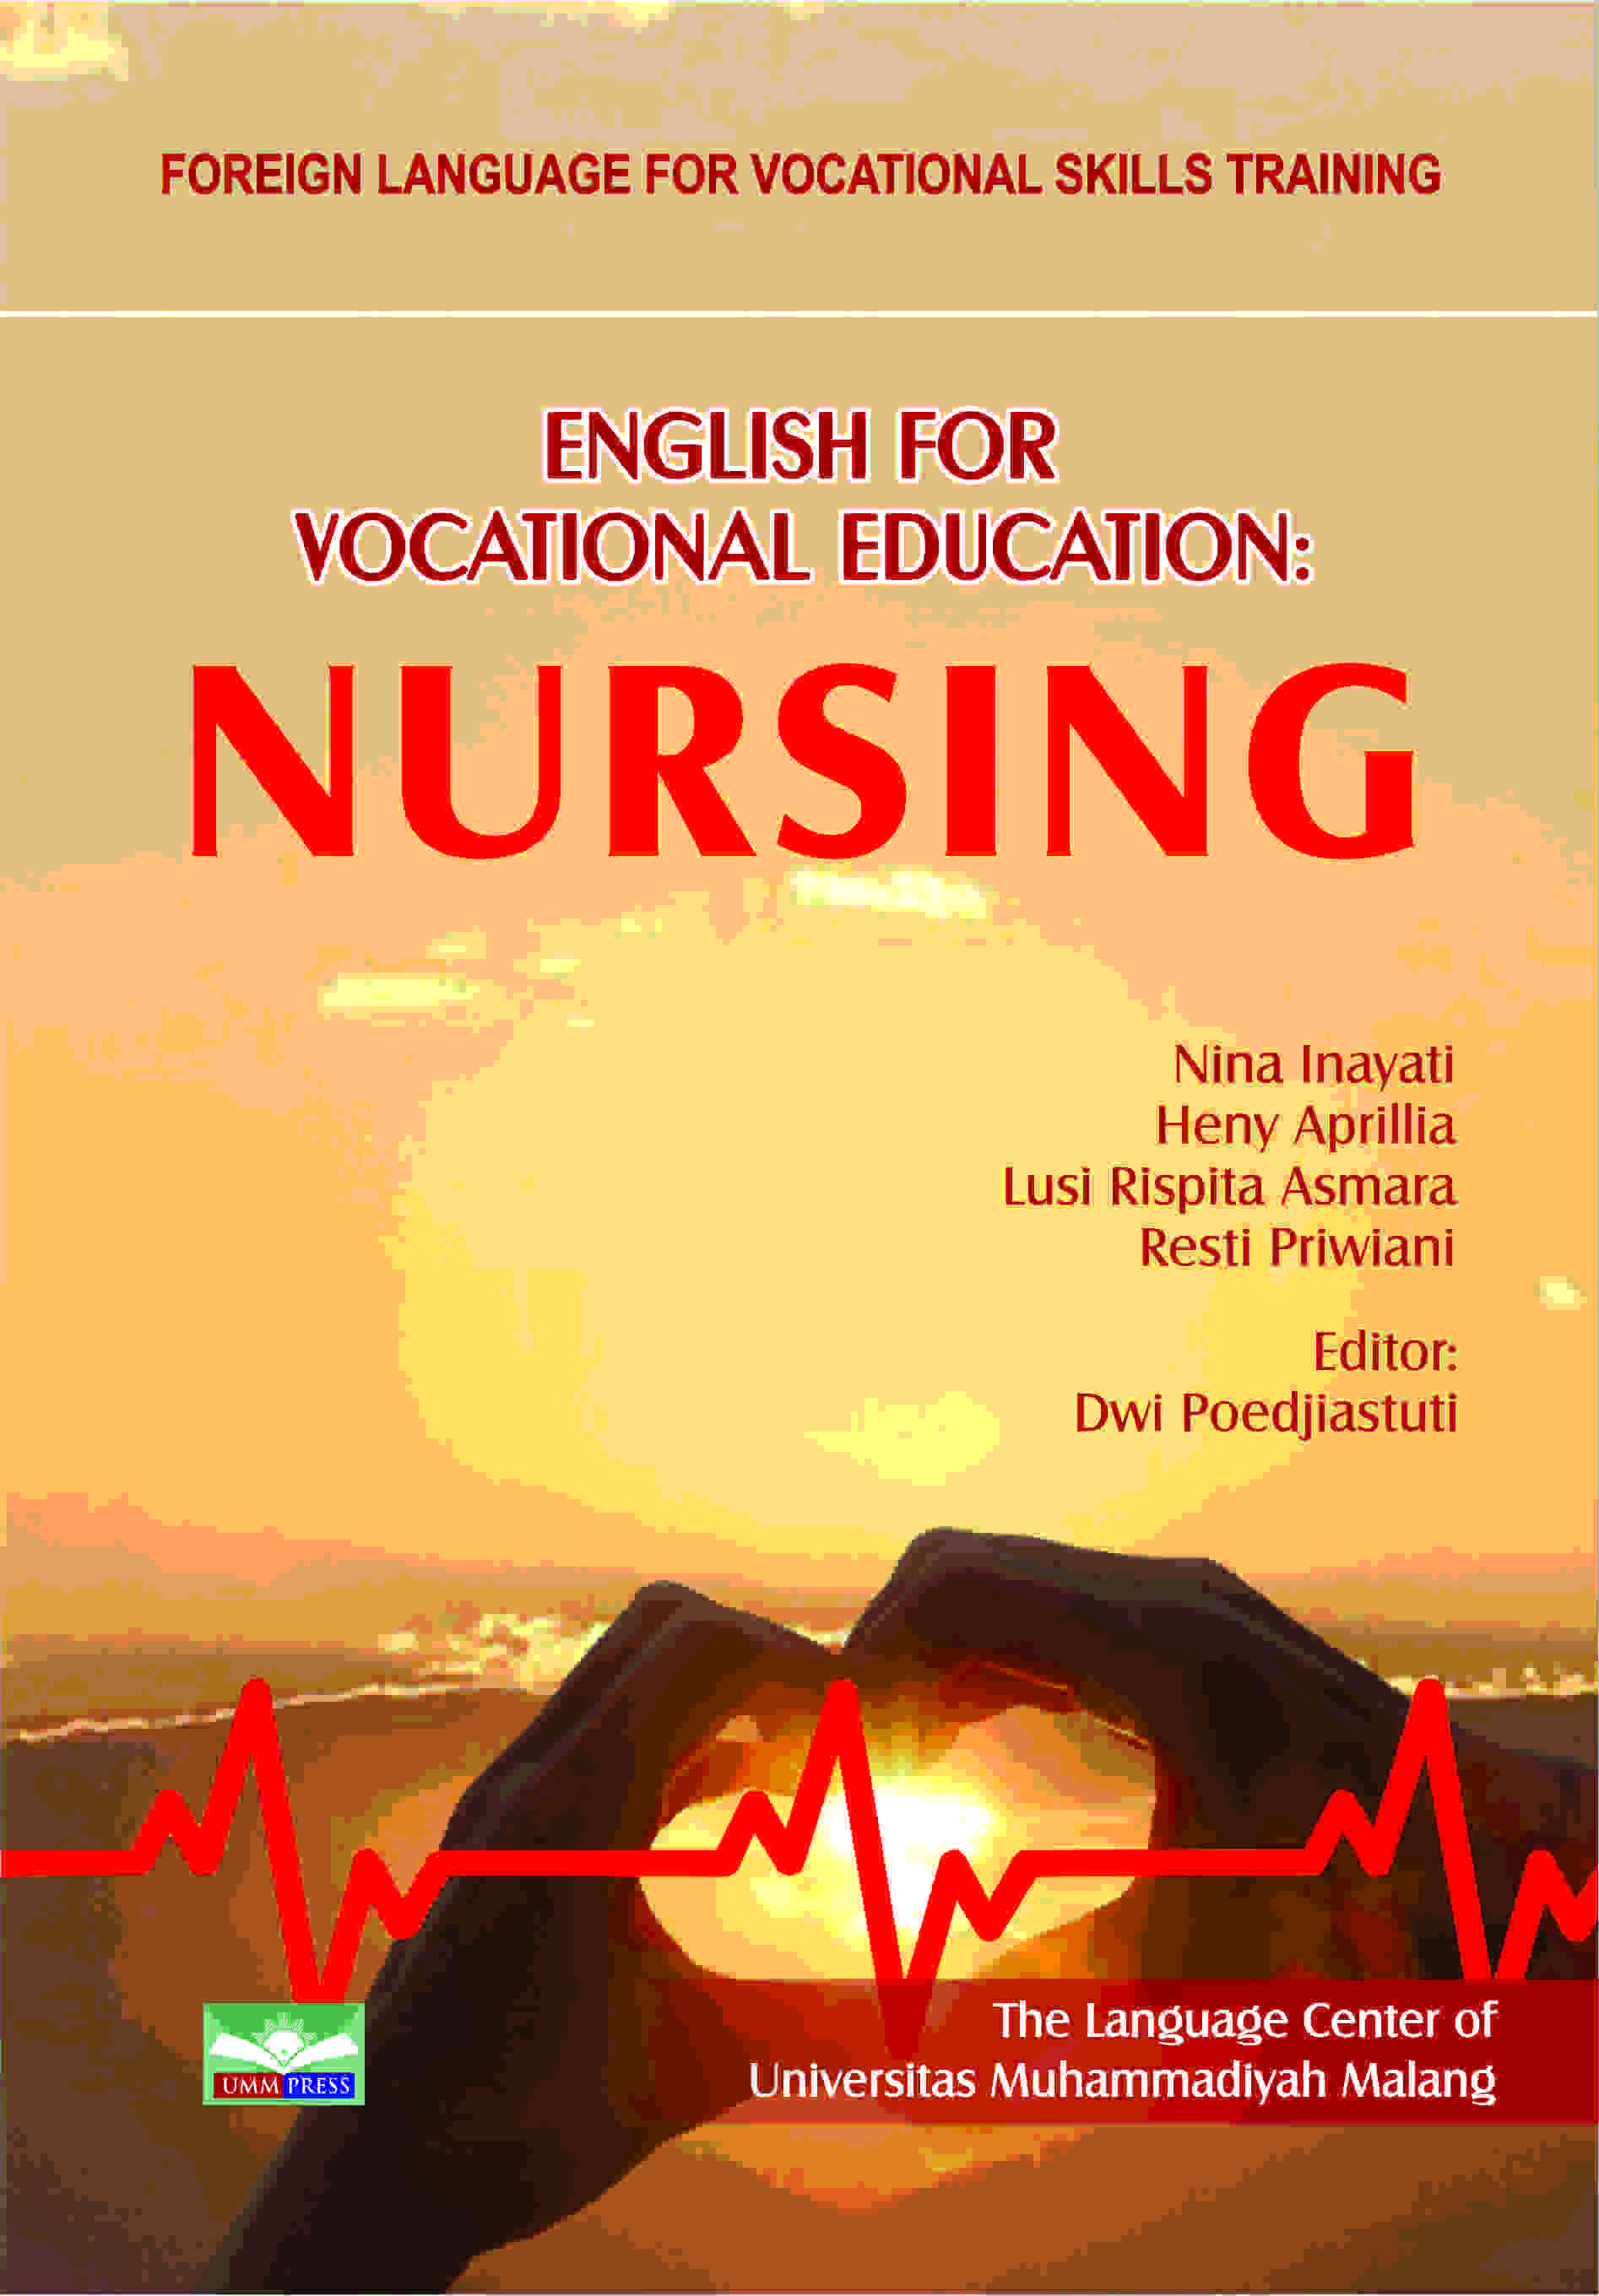 FLVST - ENGLISH FOR VOCATIONAL EDUCATION NURSING